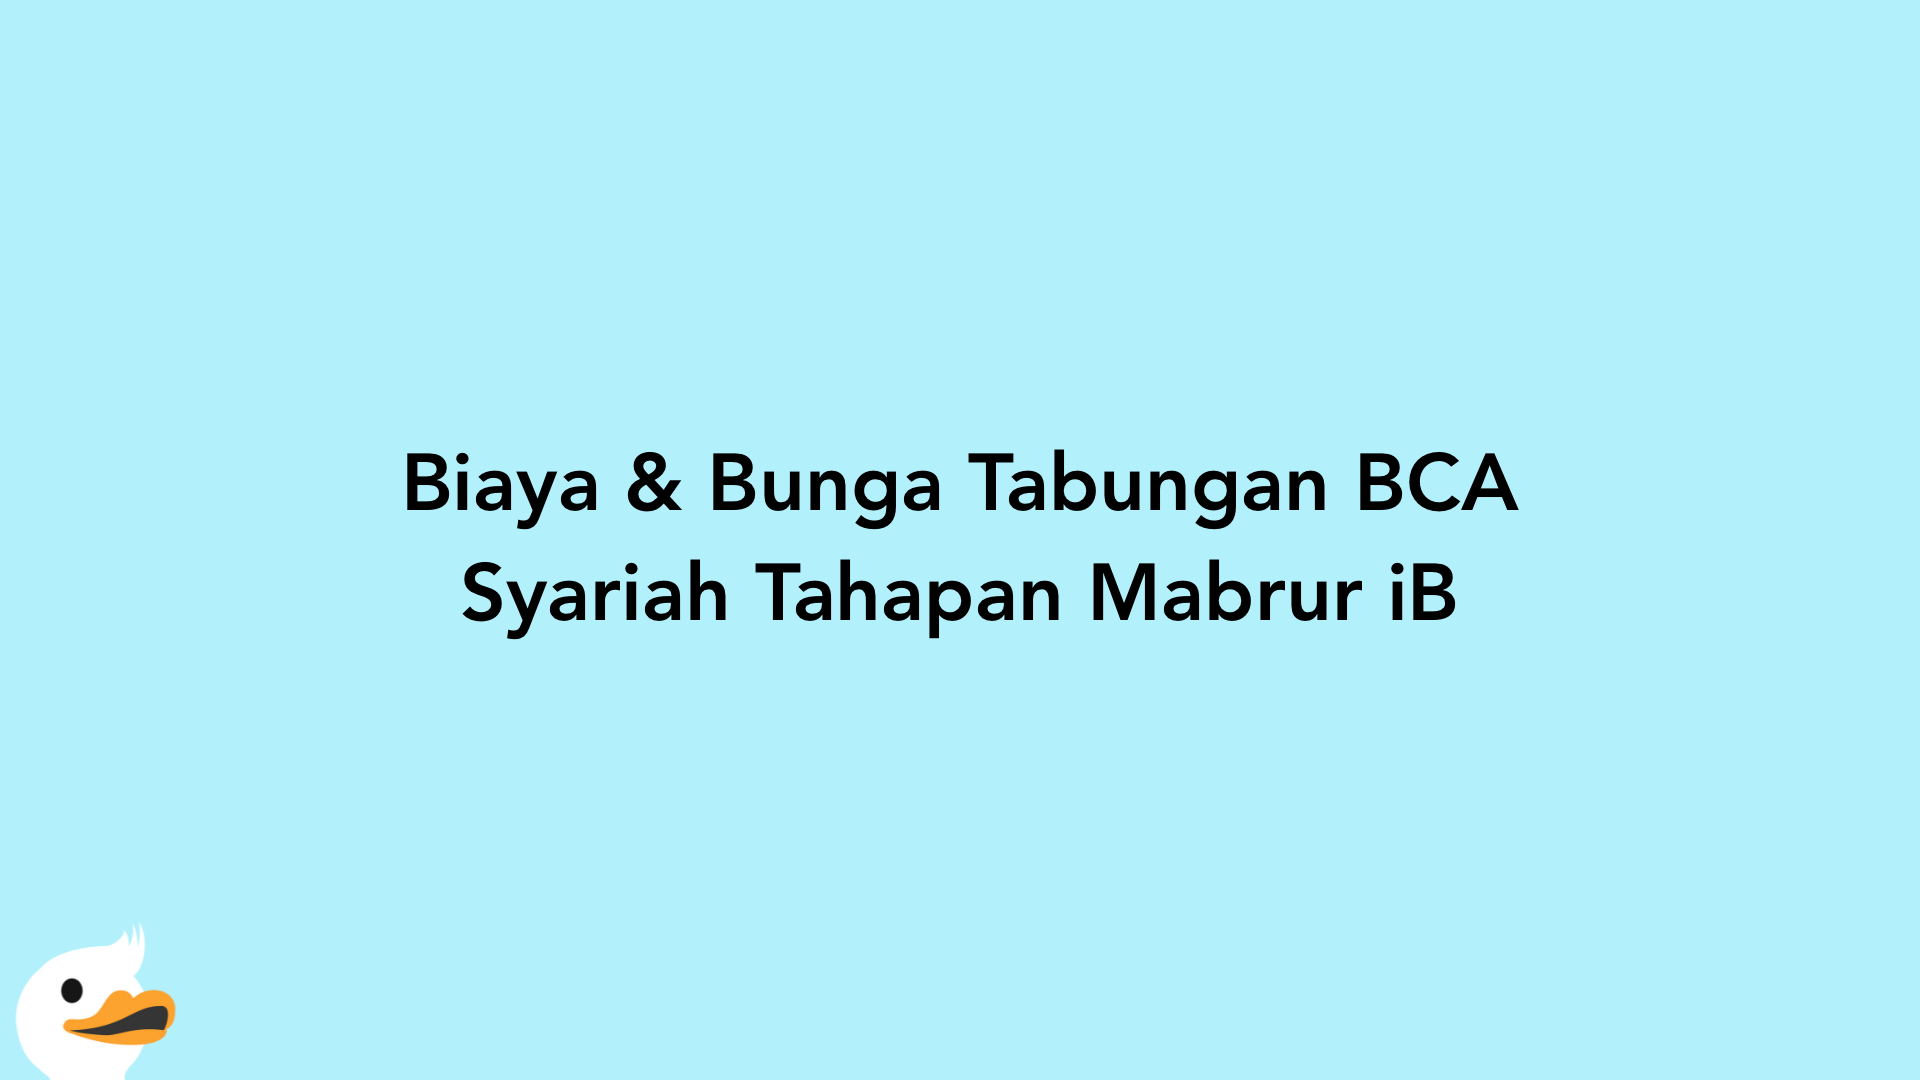 Biaya & Bunga Tabungan BCA Syariah Tahapan Mabrur iB